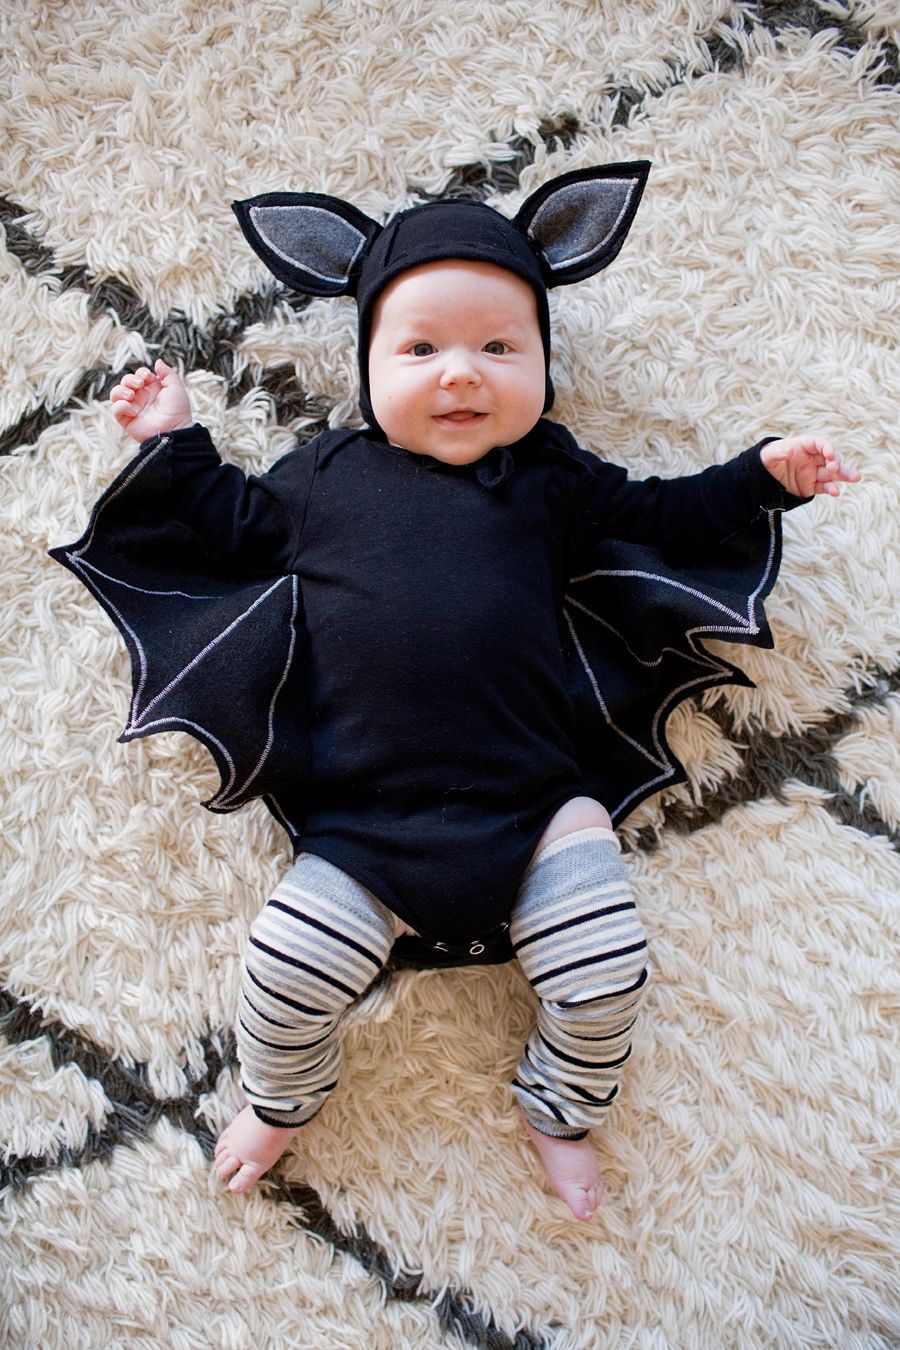 unique infant halloween costumes